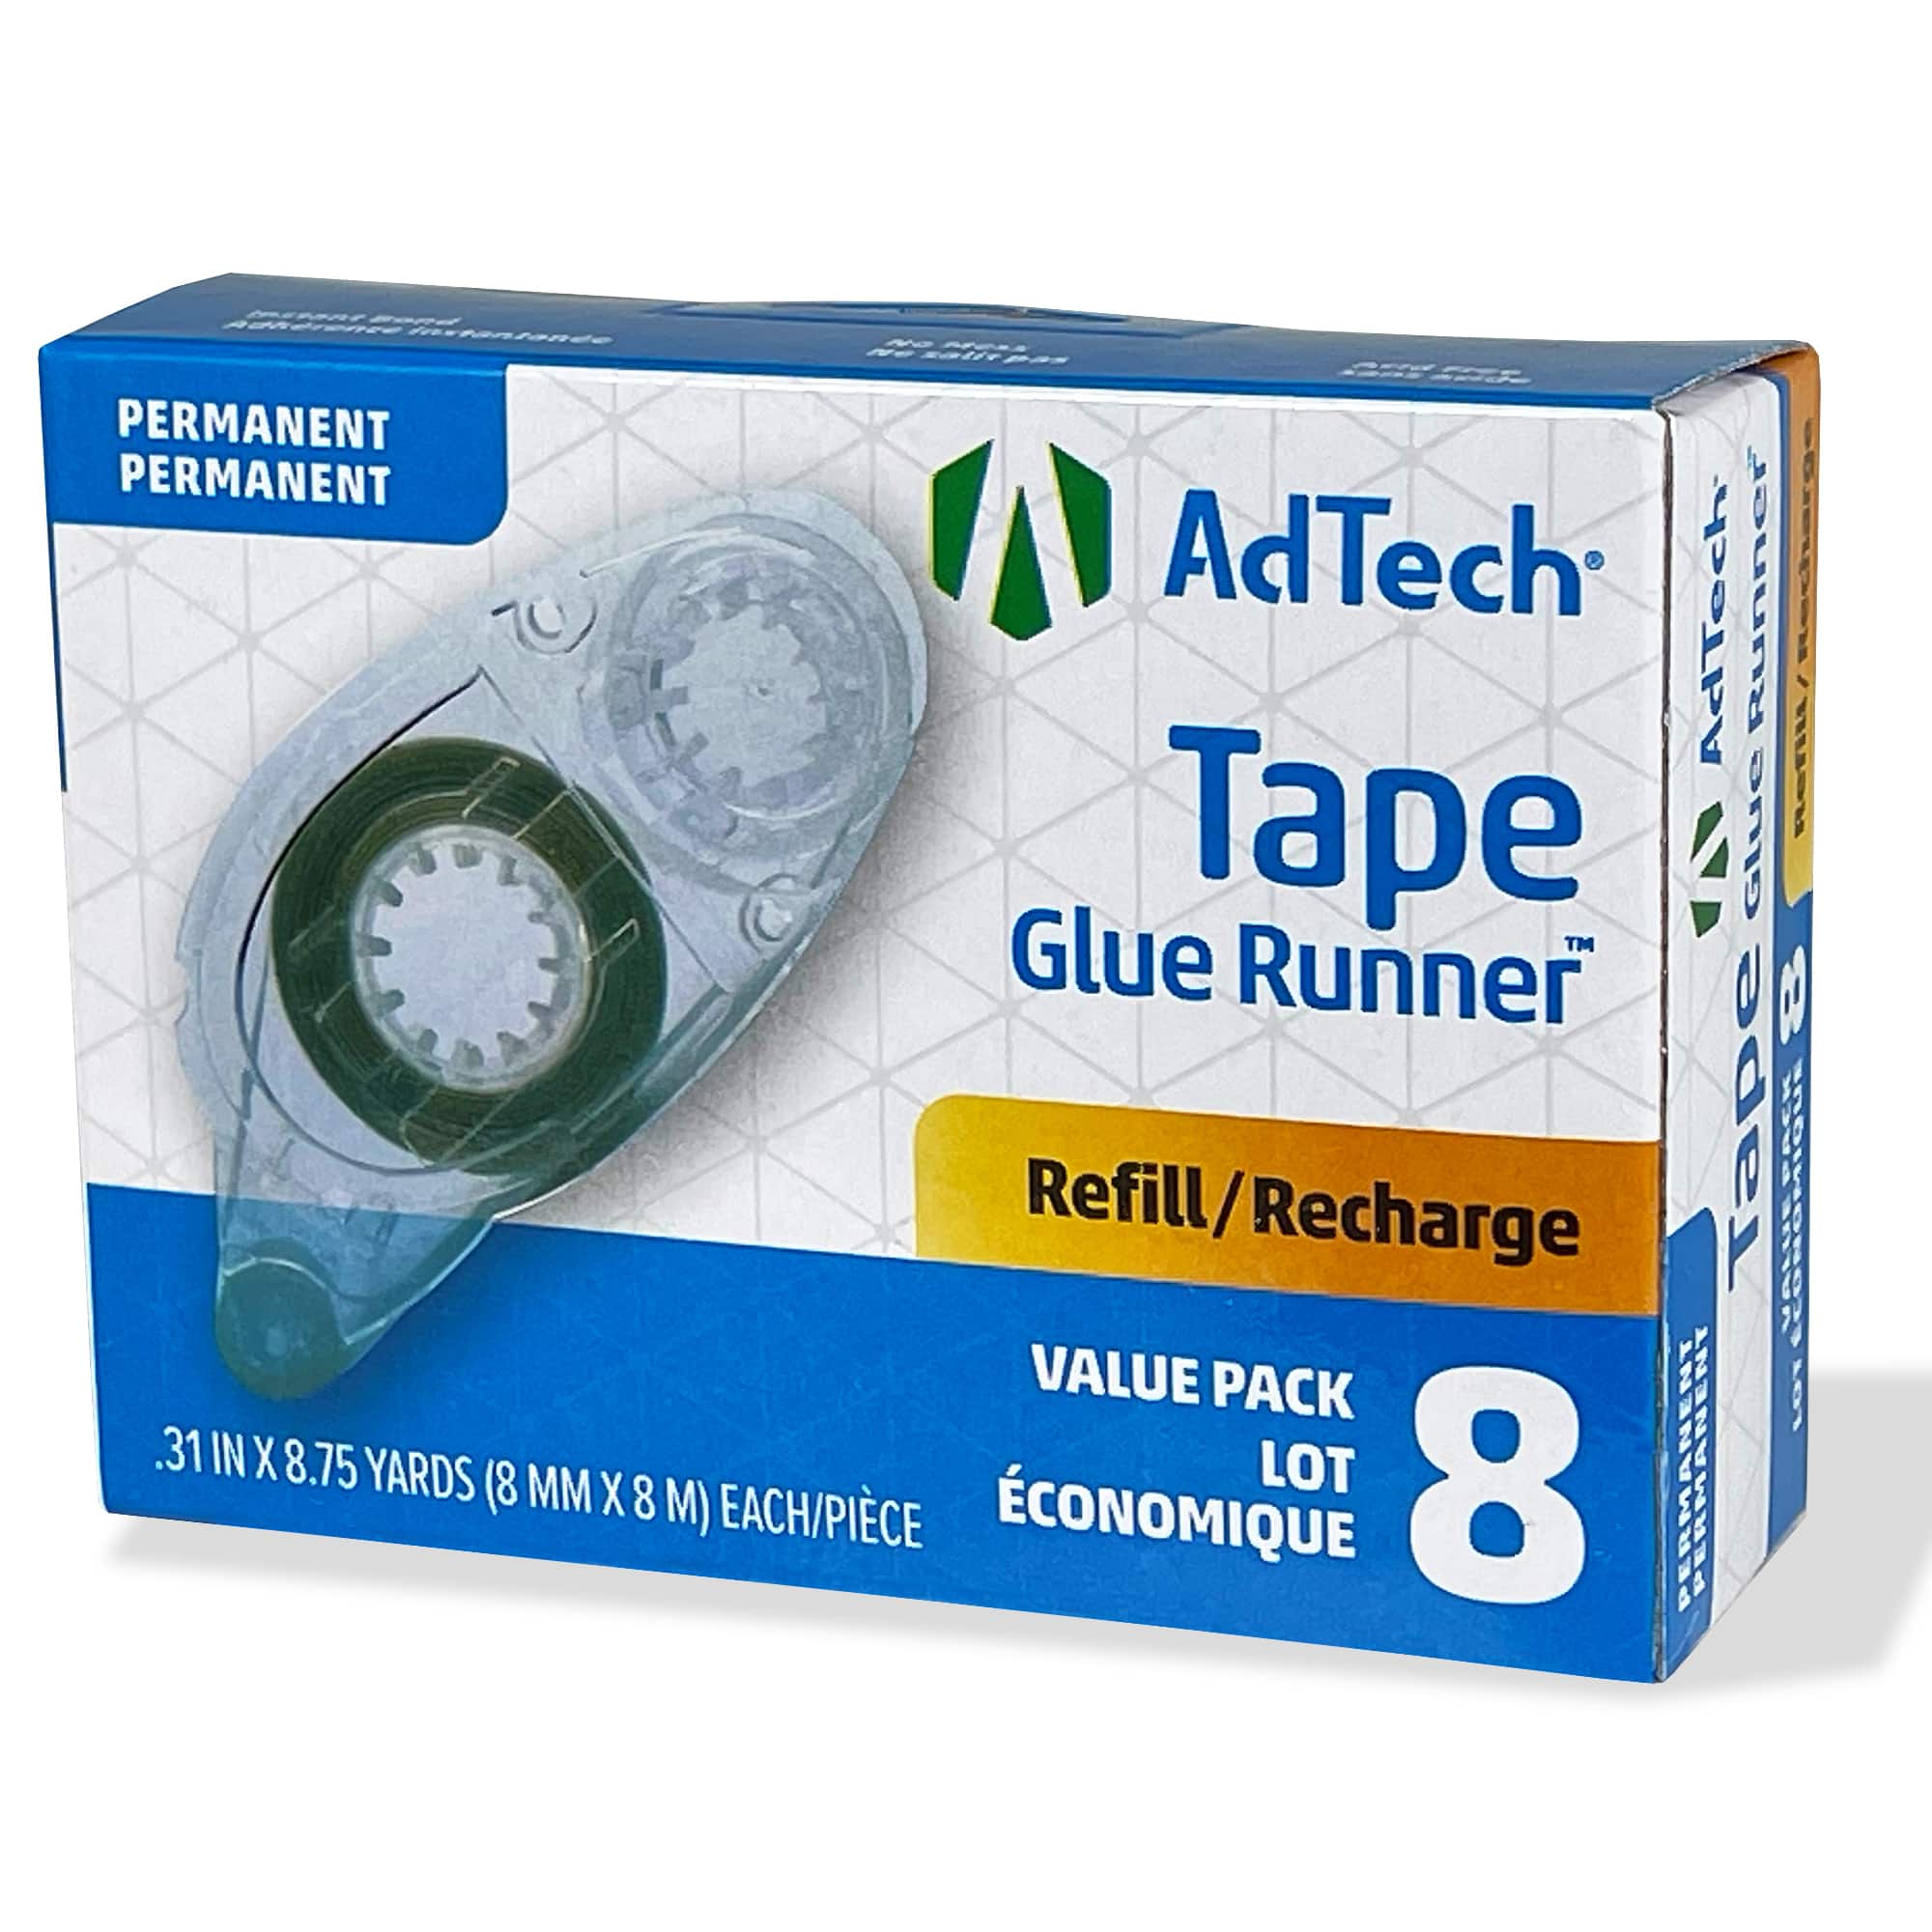 Ad Tech Crafter's Tape Refills - NOTM291146